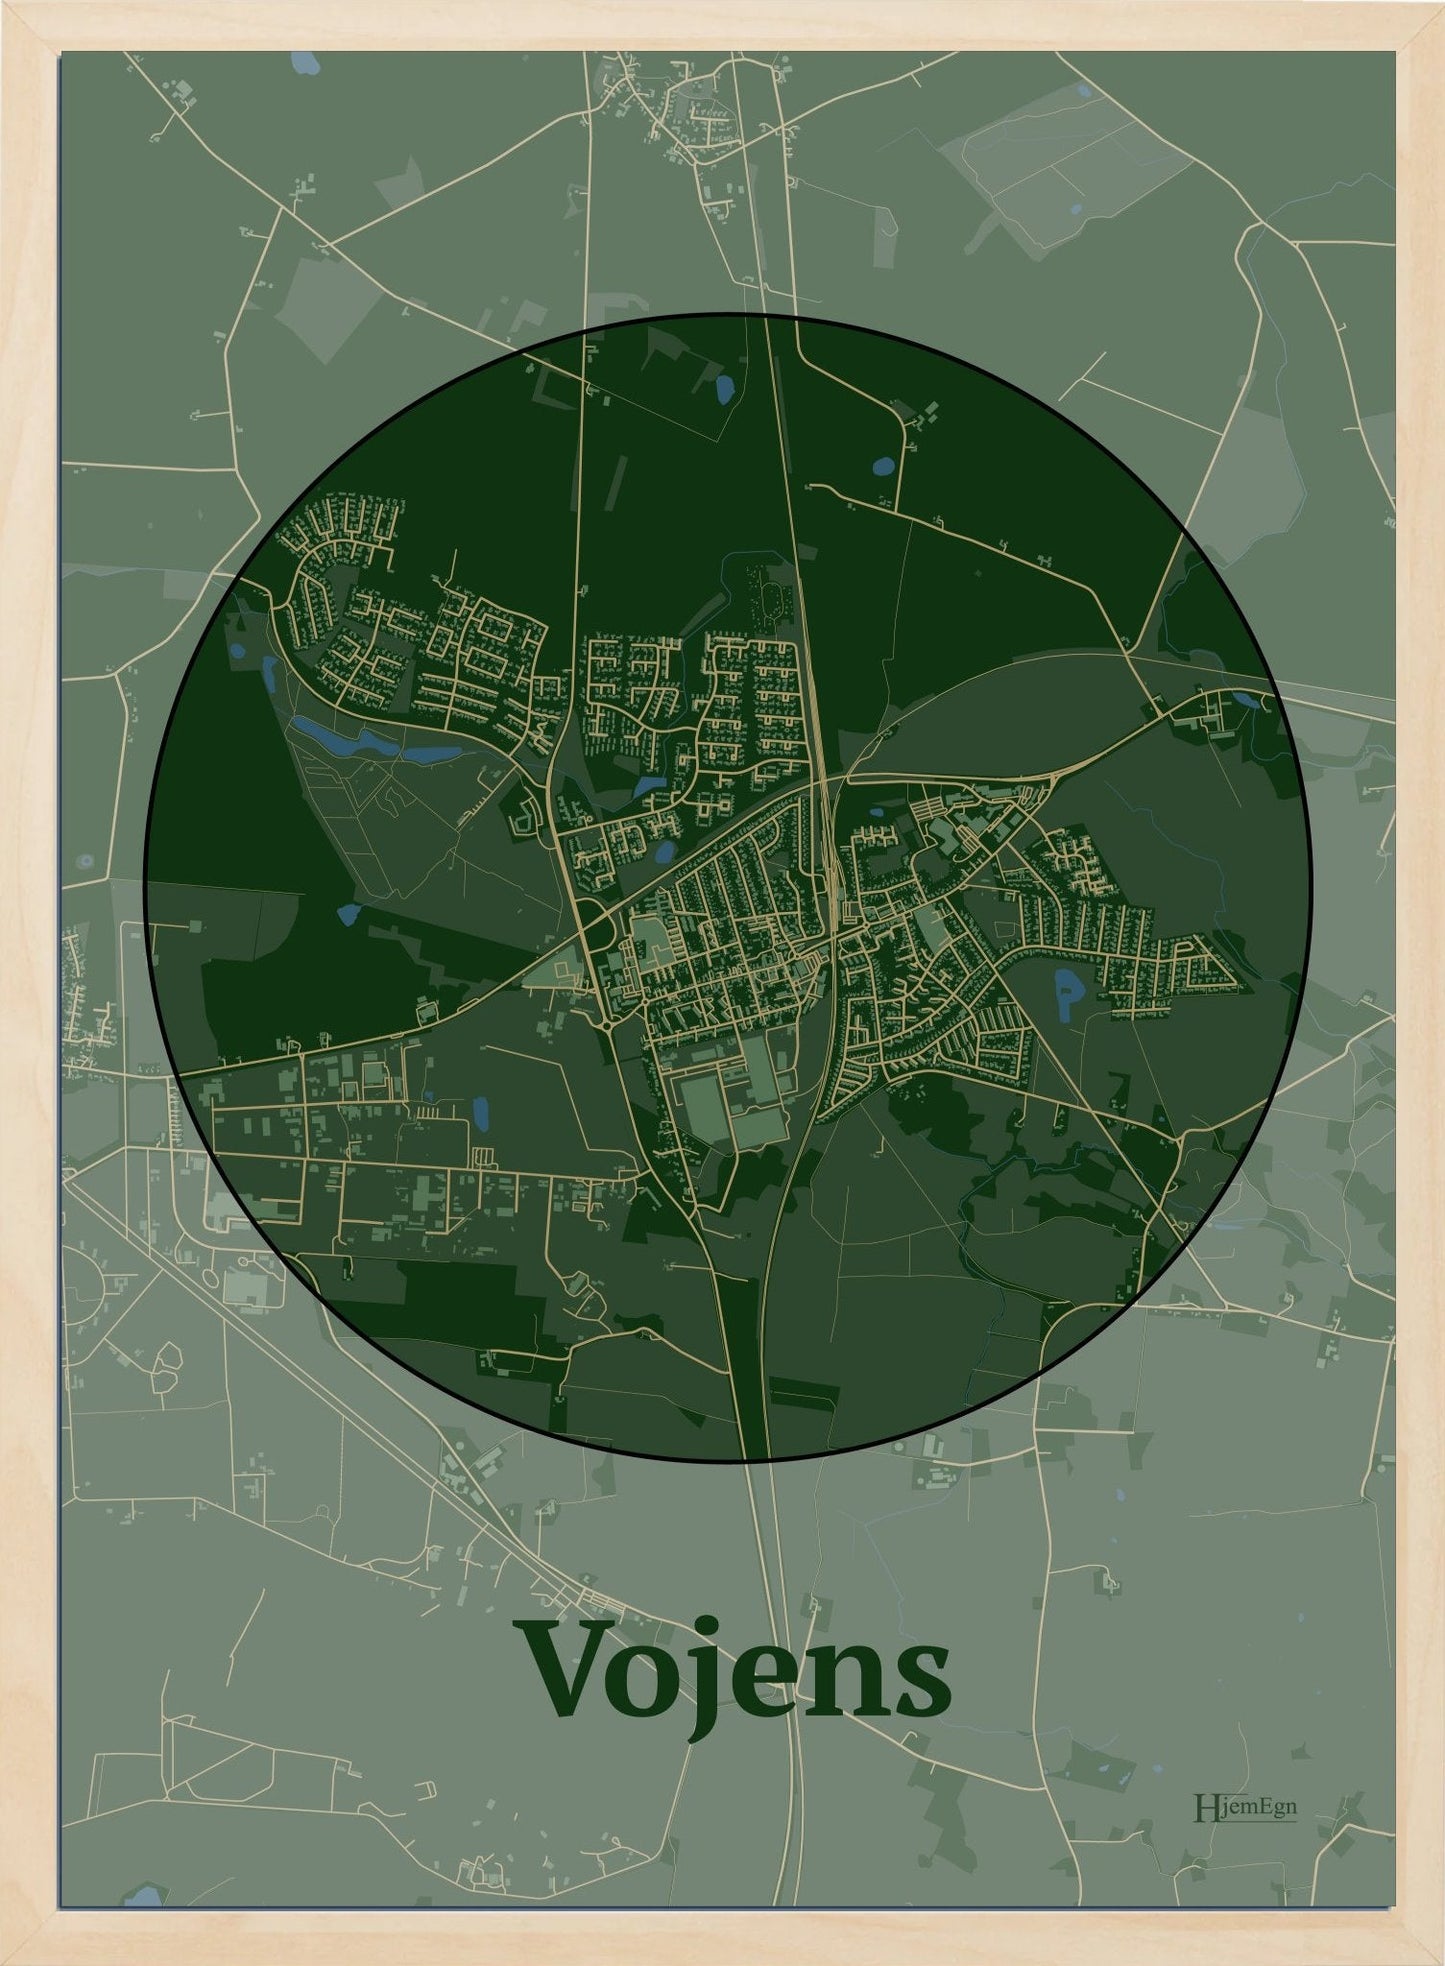 Vojens plakat i farve mørk grøn og HjemEgn.dk design centrum. Design bykort for Vojens